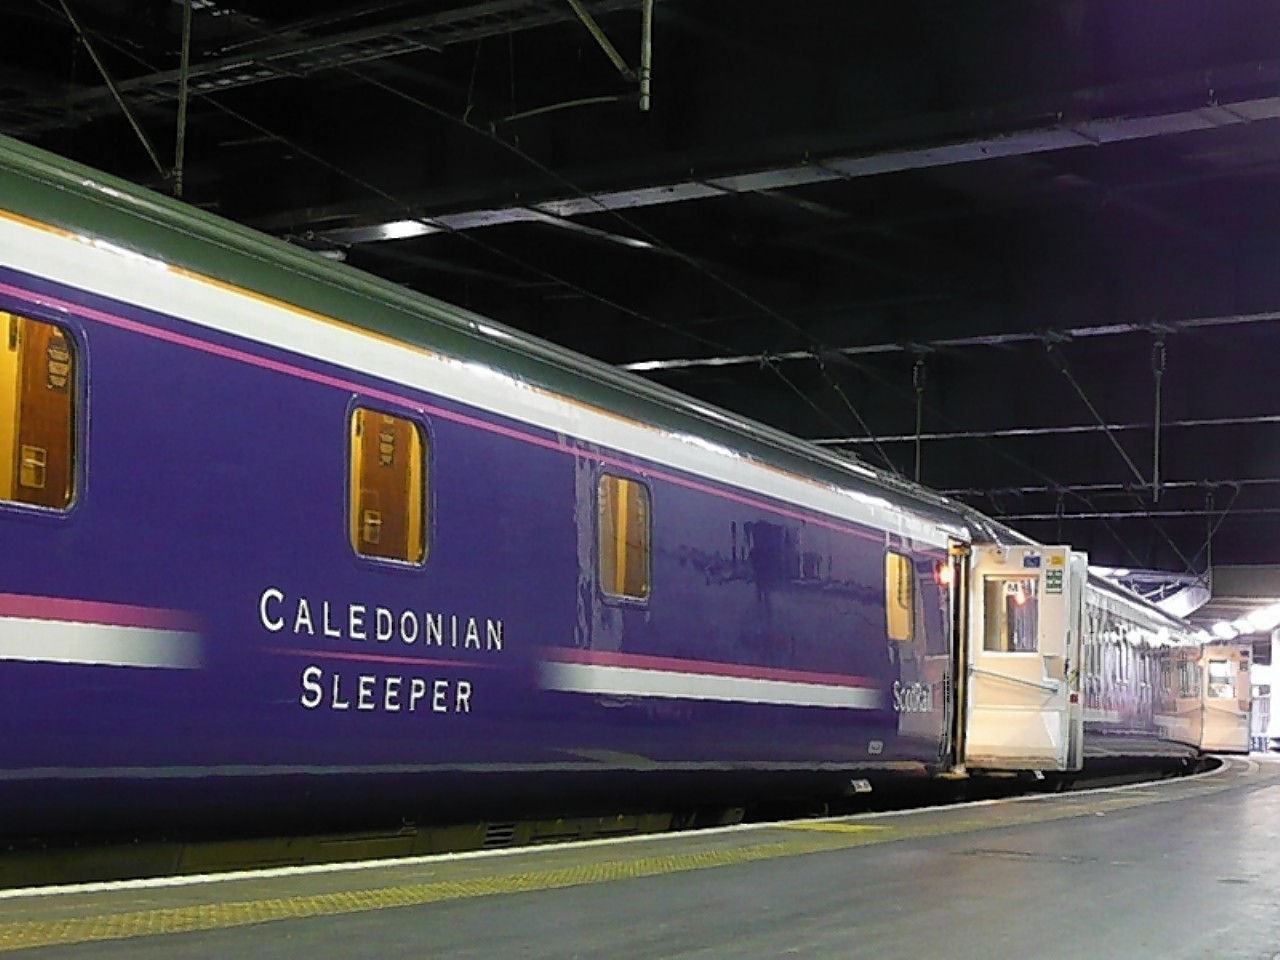 The Caledonian Sleeper